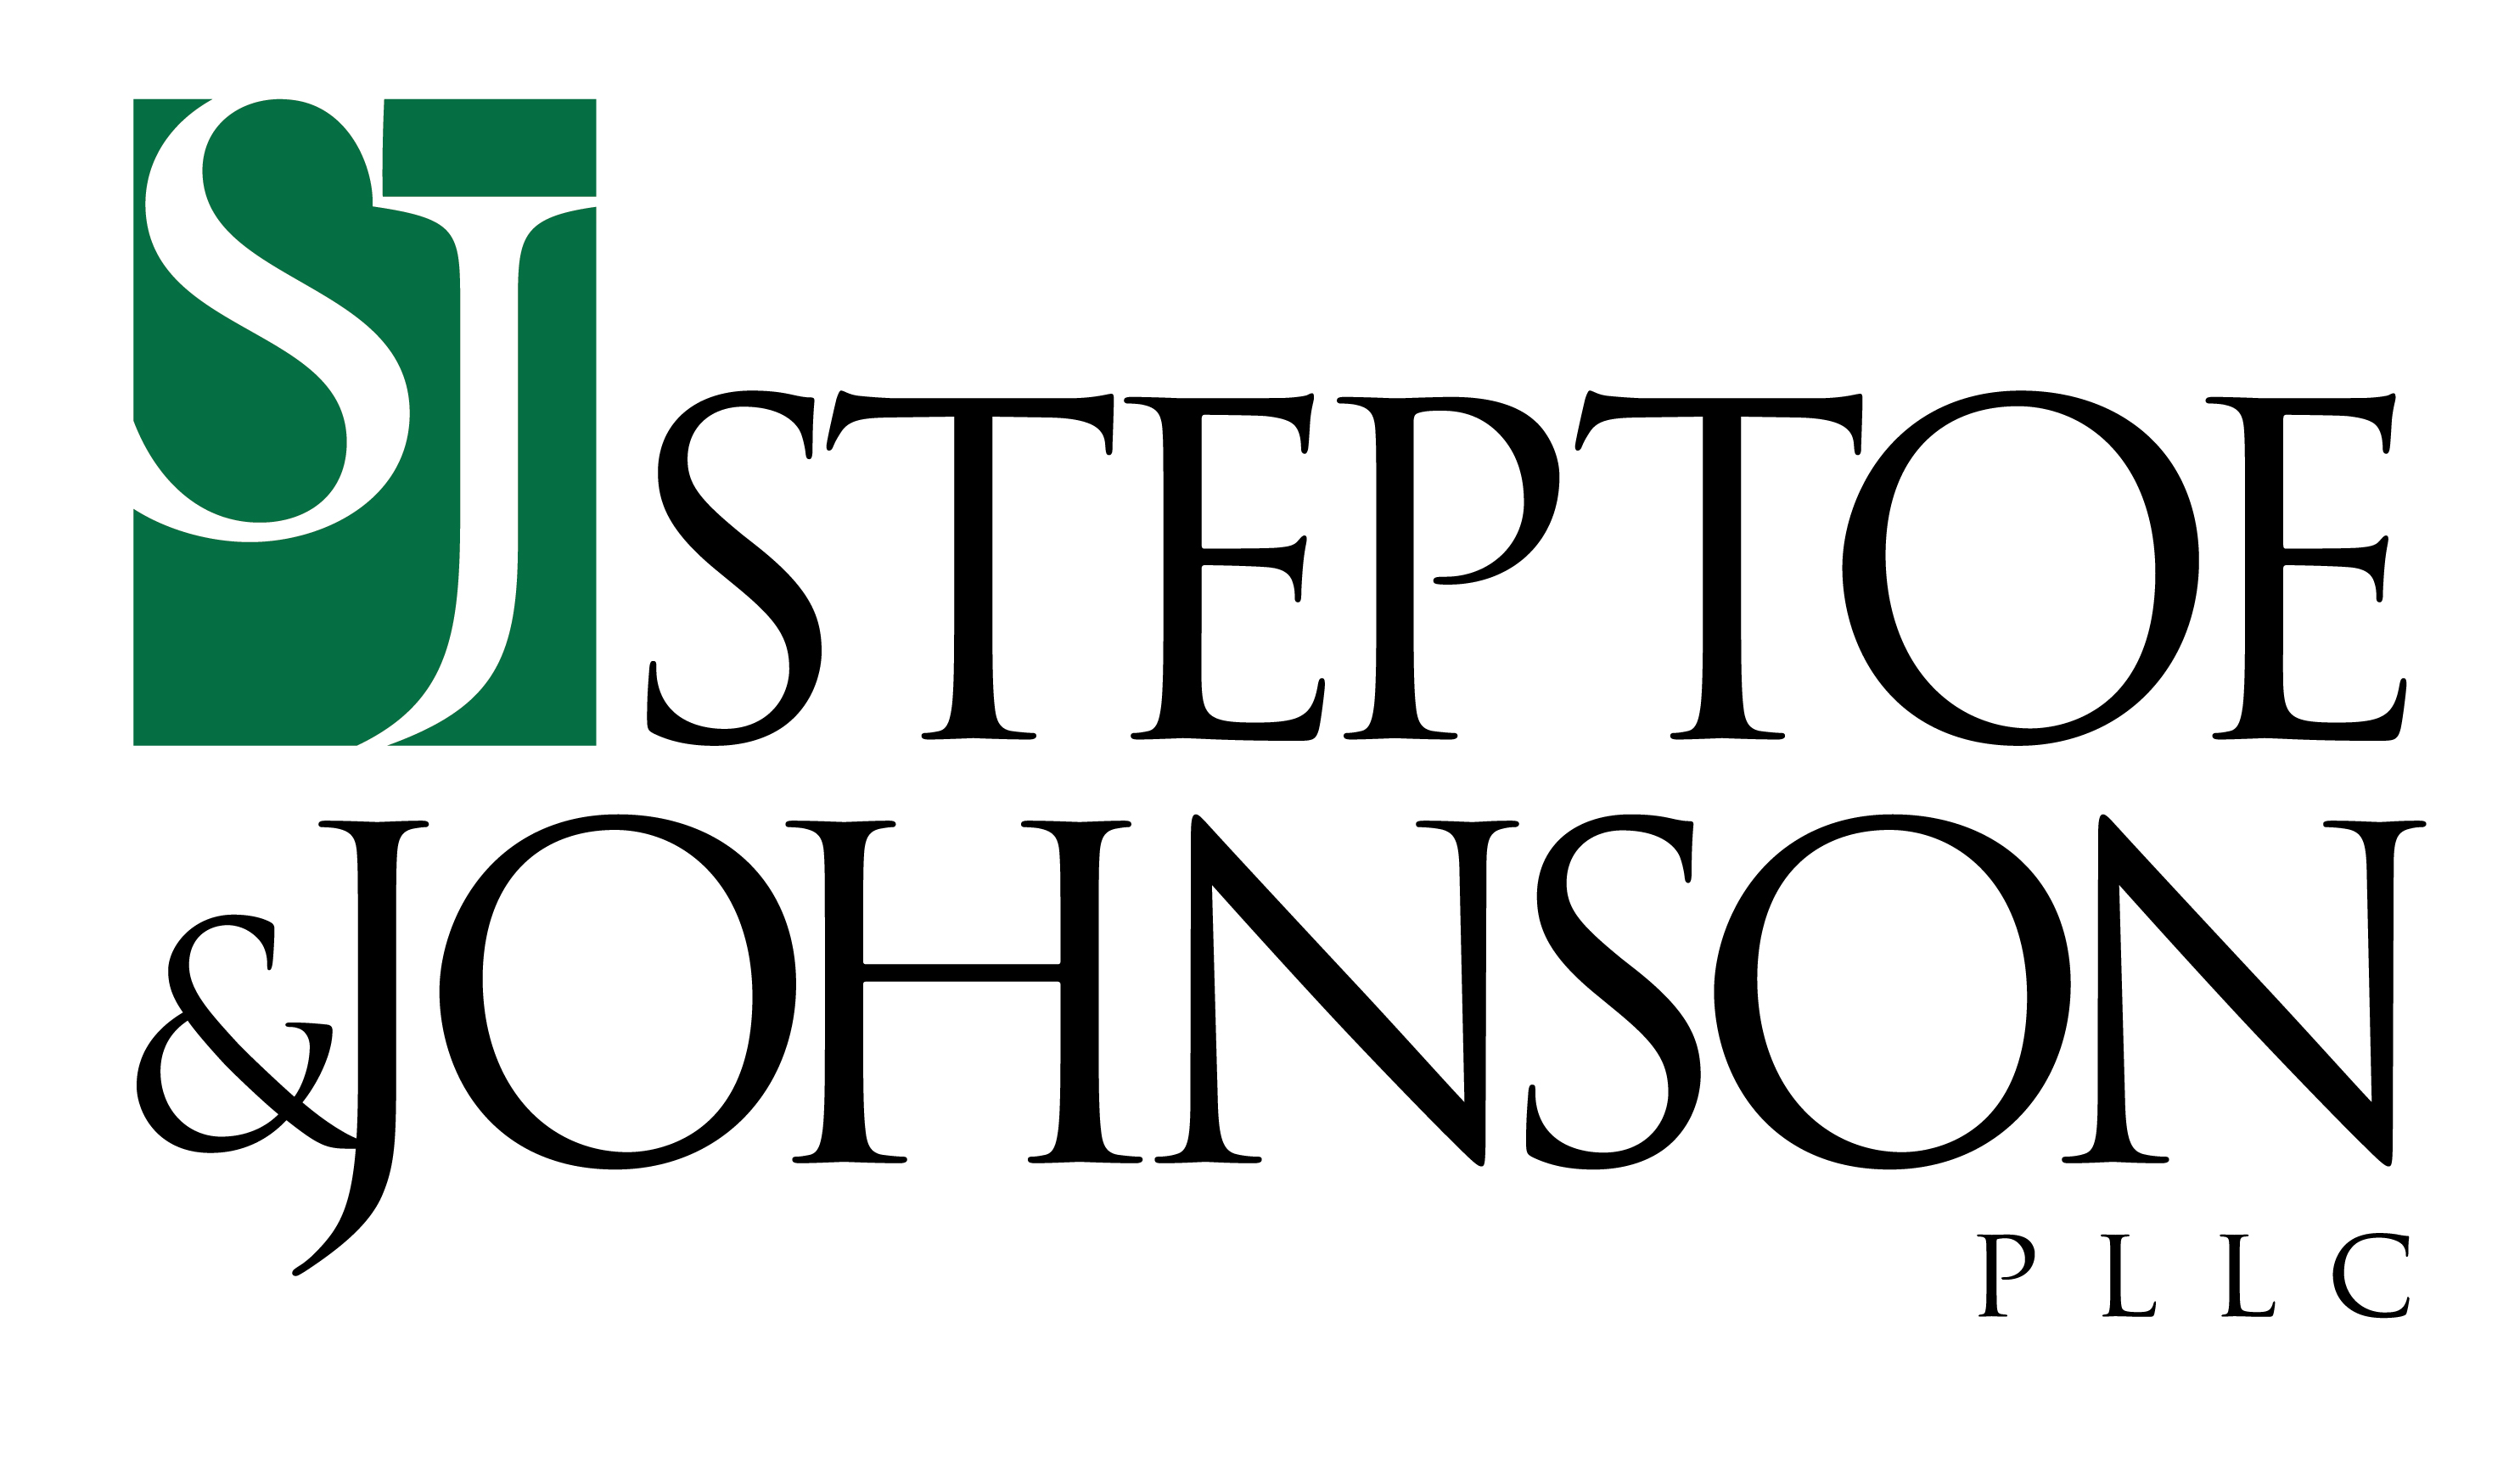 Steptoe & Johnson PLLC